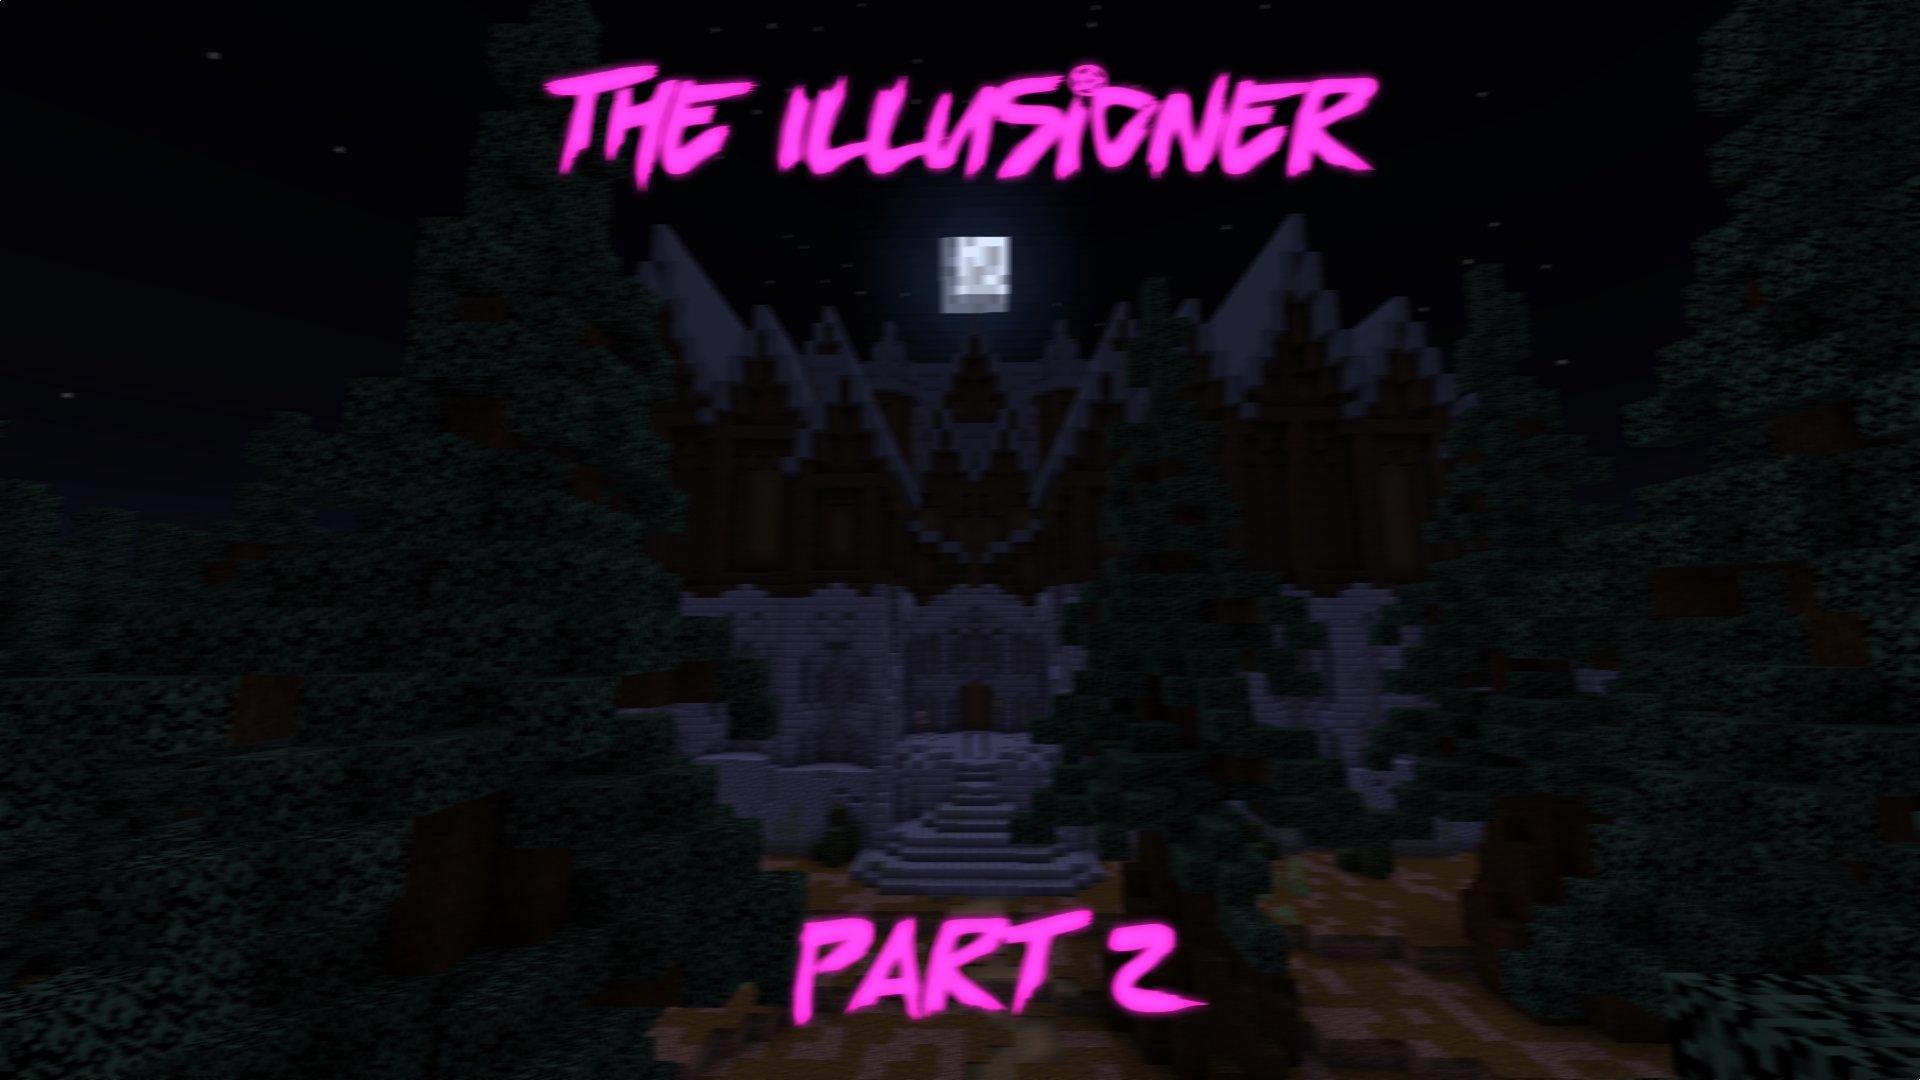 İndir The Illusioner Part 2 için Minecraft 1.15.2